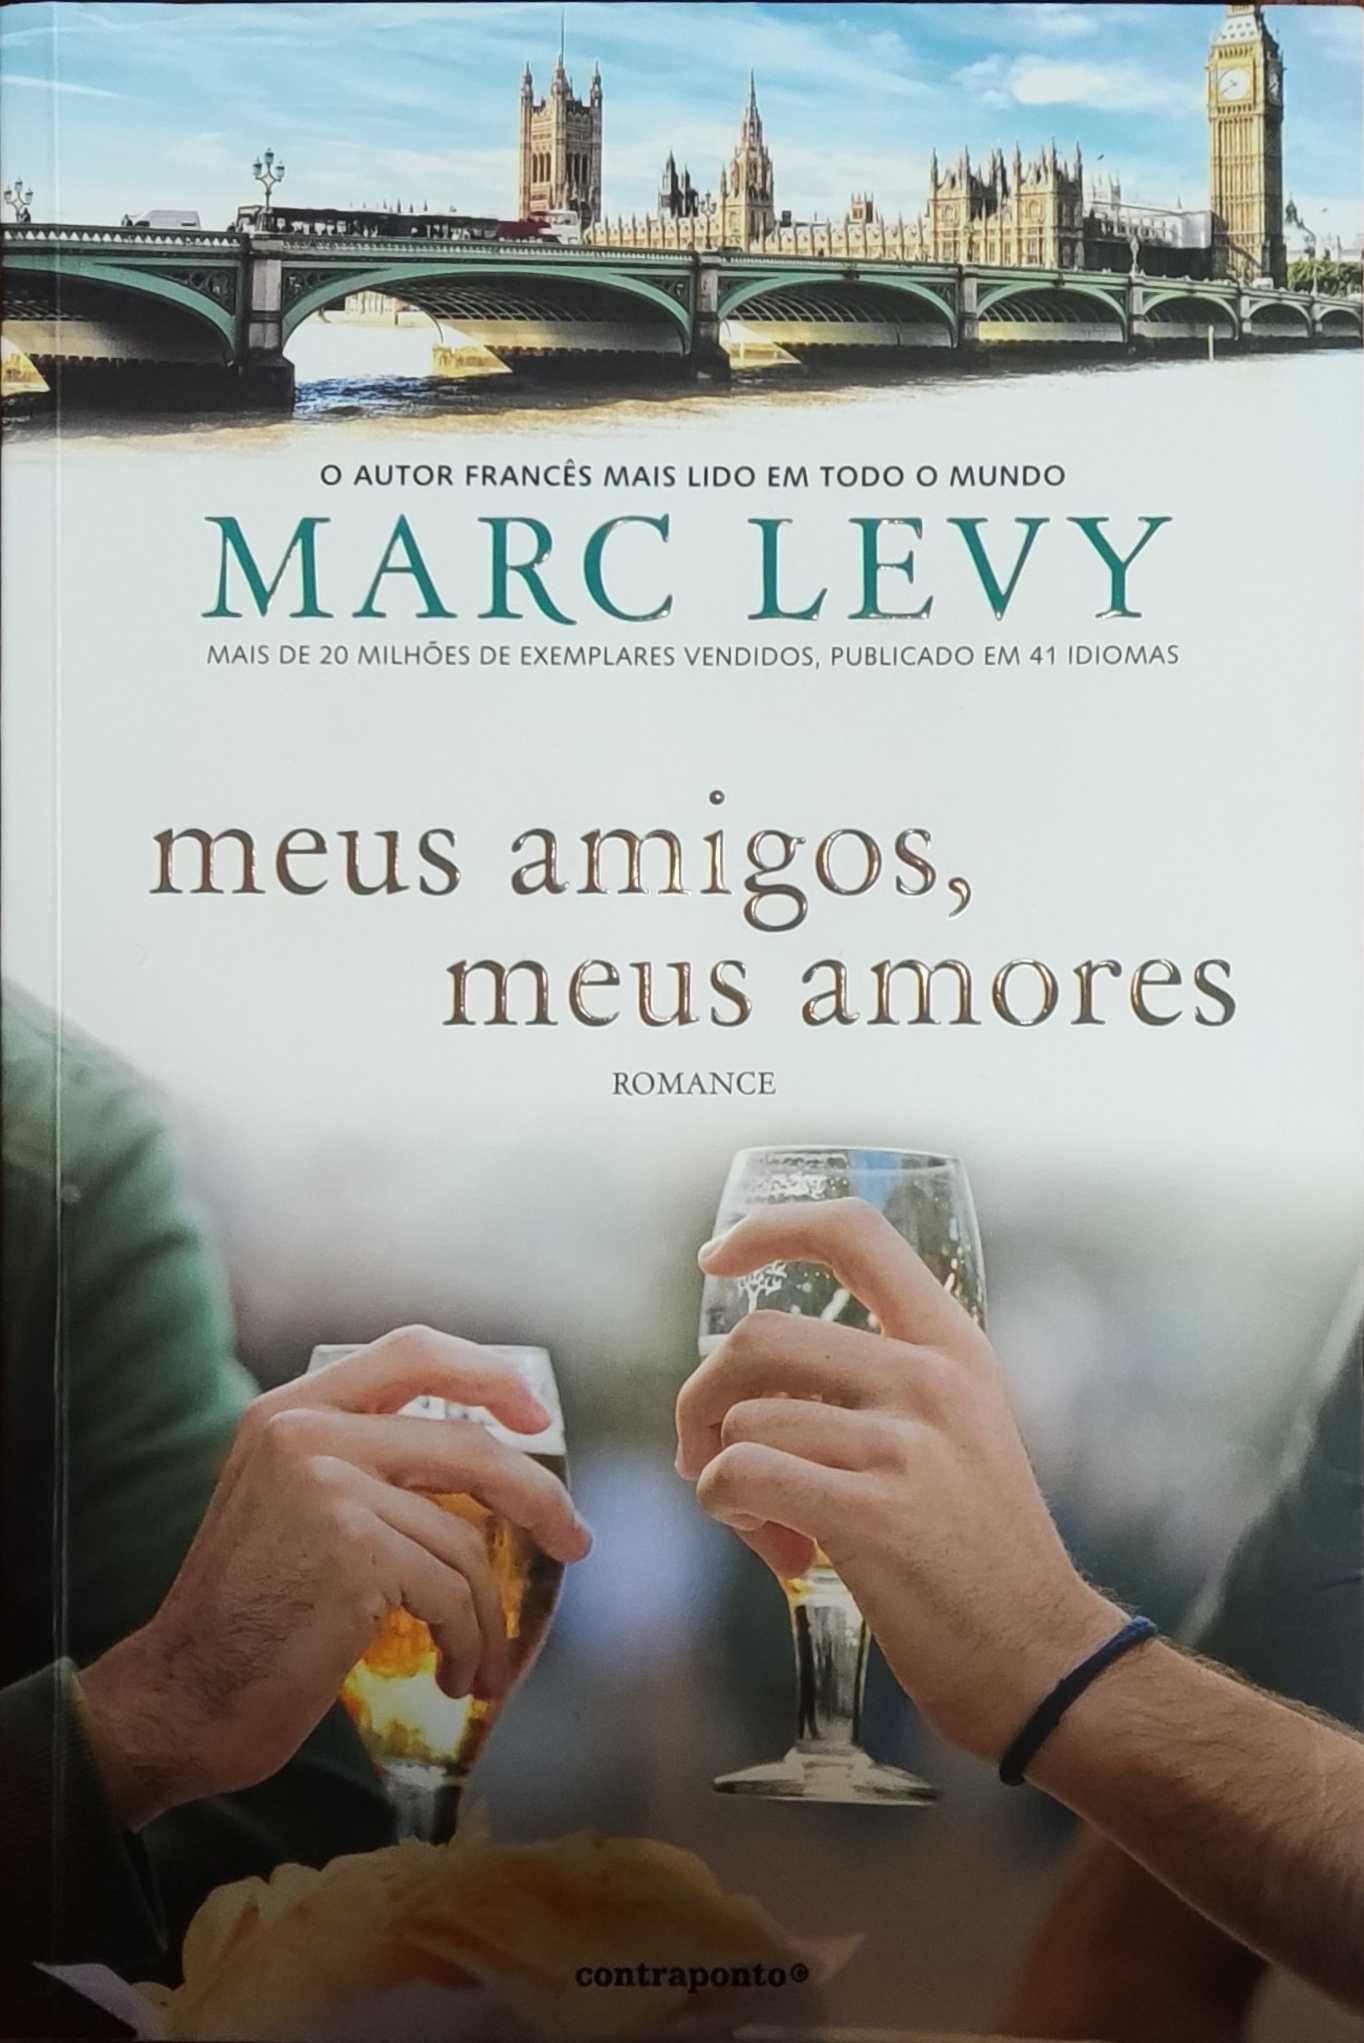 Livro "Meus Amigos, Meus Amores" de Marc Levy